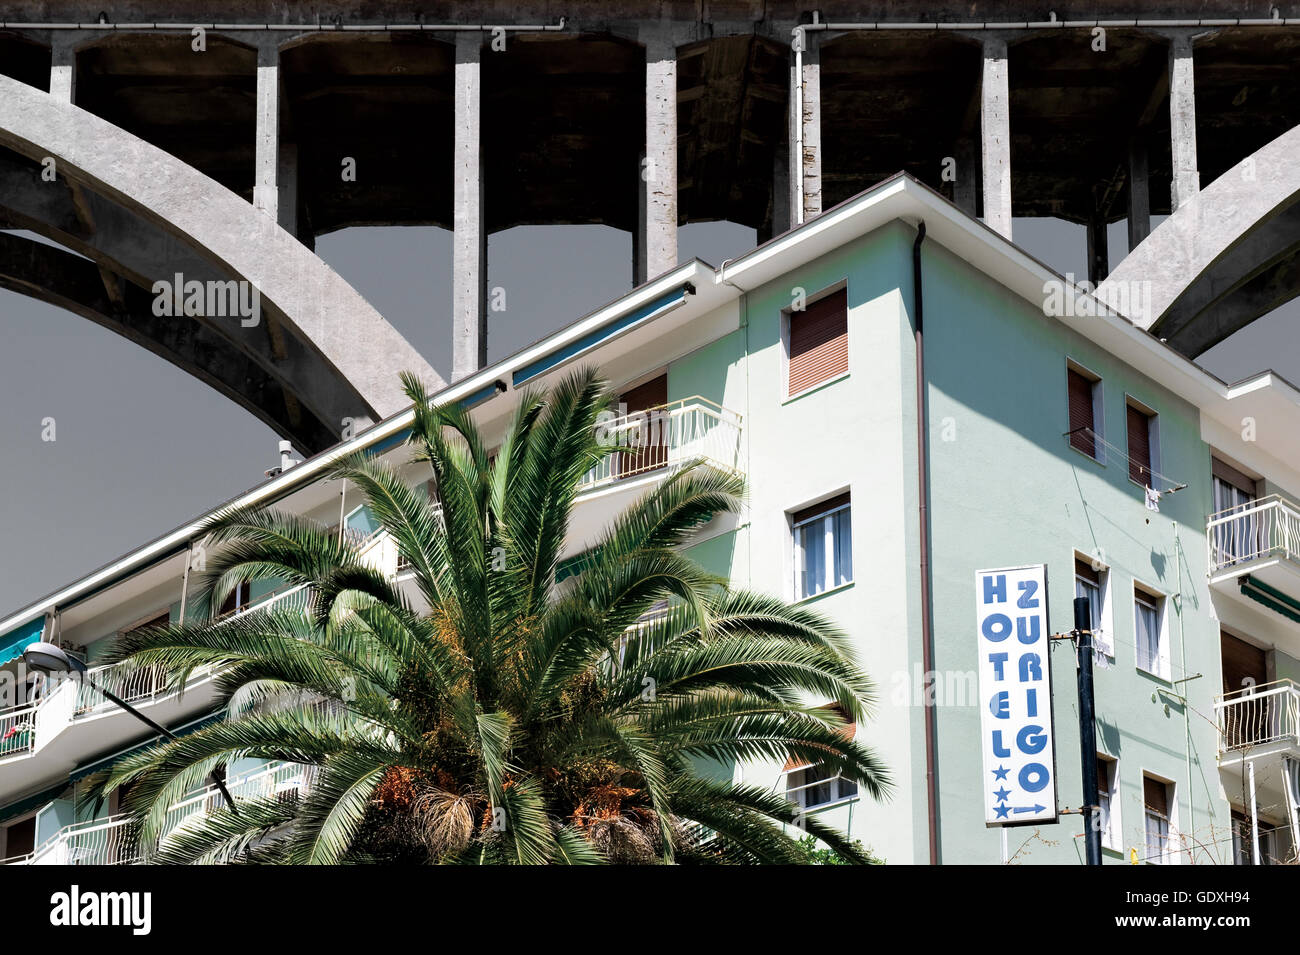 Hotel Zurigo under a highway bridge in Liguria, Italy, 2012 Stock Photo